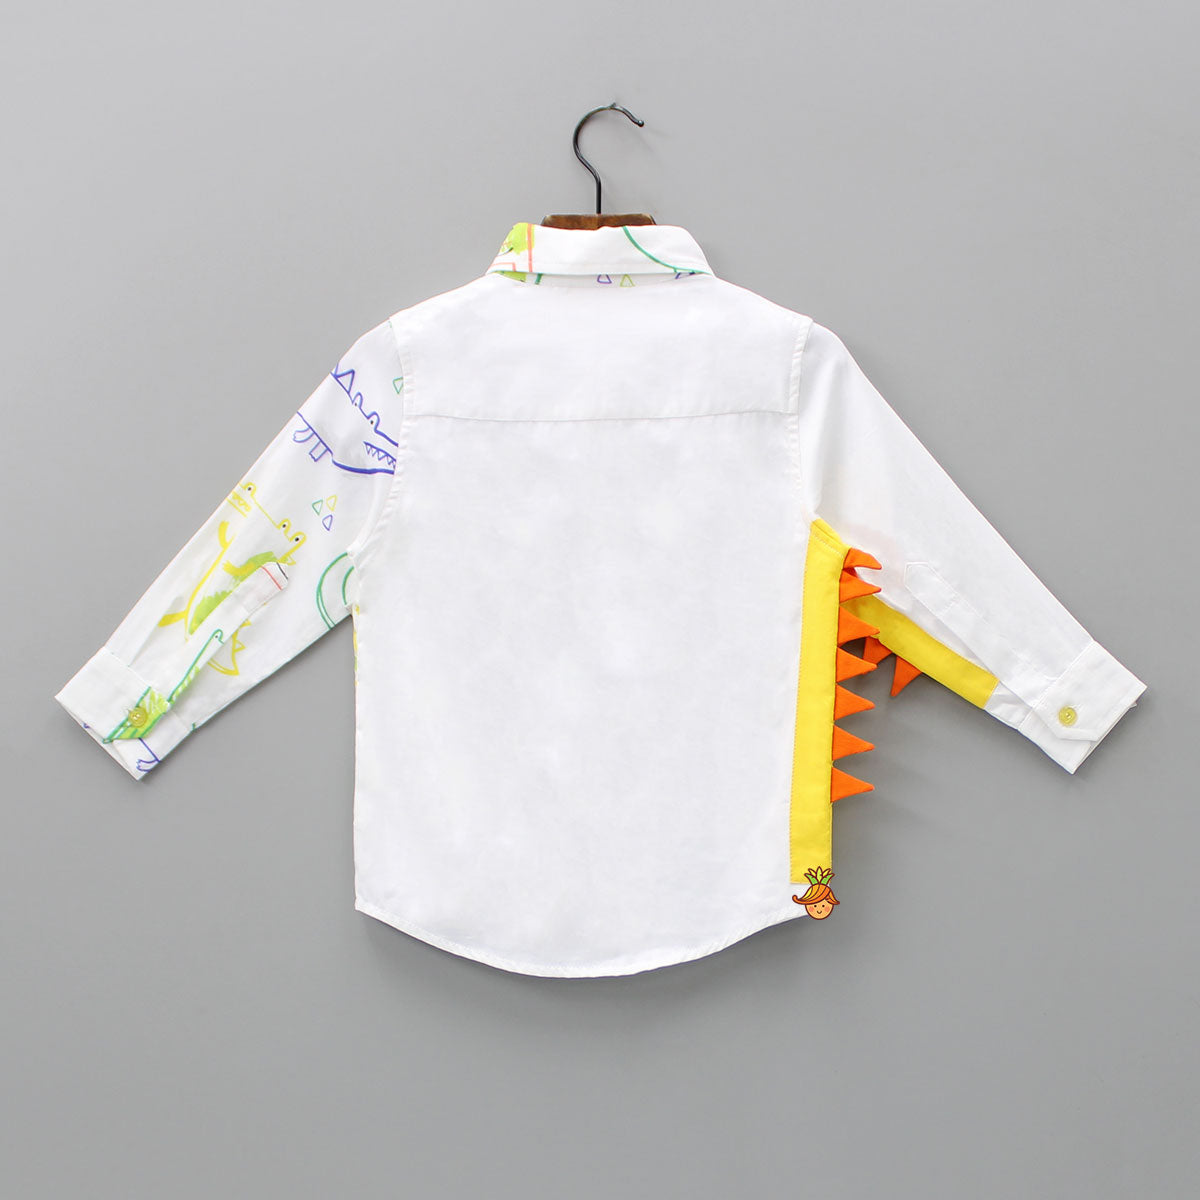 Printed Triangular Lace Detailed White Shirt